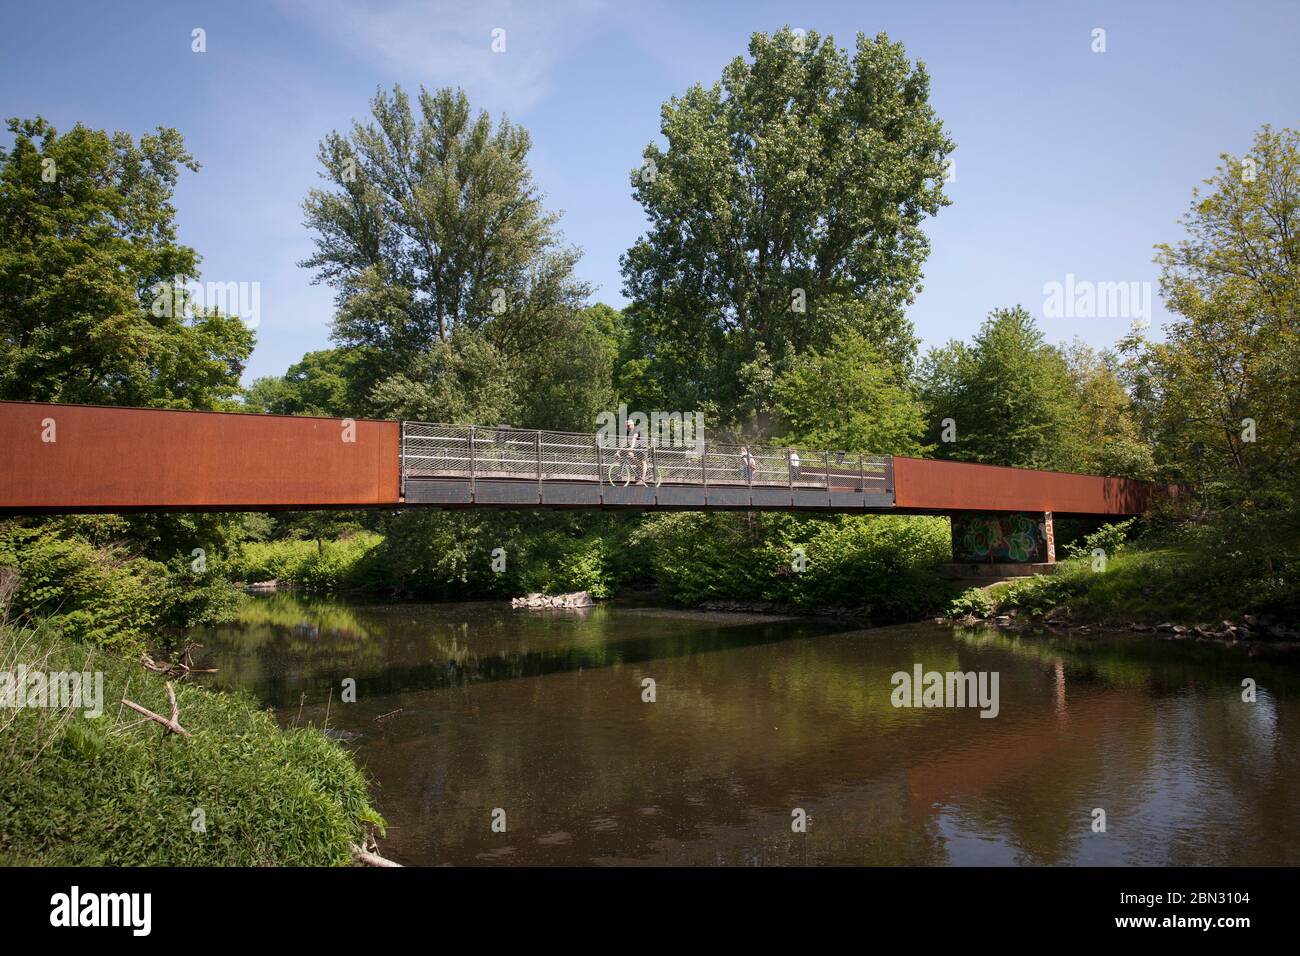 bridge over the river Wupper in the Ludwig-Rehbock park in the district of Opladen, Leverkusen, North Rhine-Westphalia, Germany.   Bruecke ueber die W Stock Photo